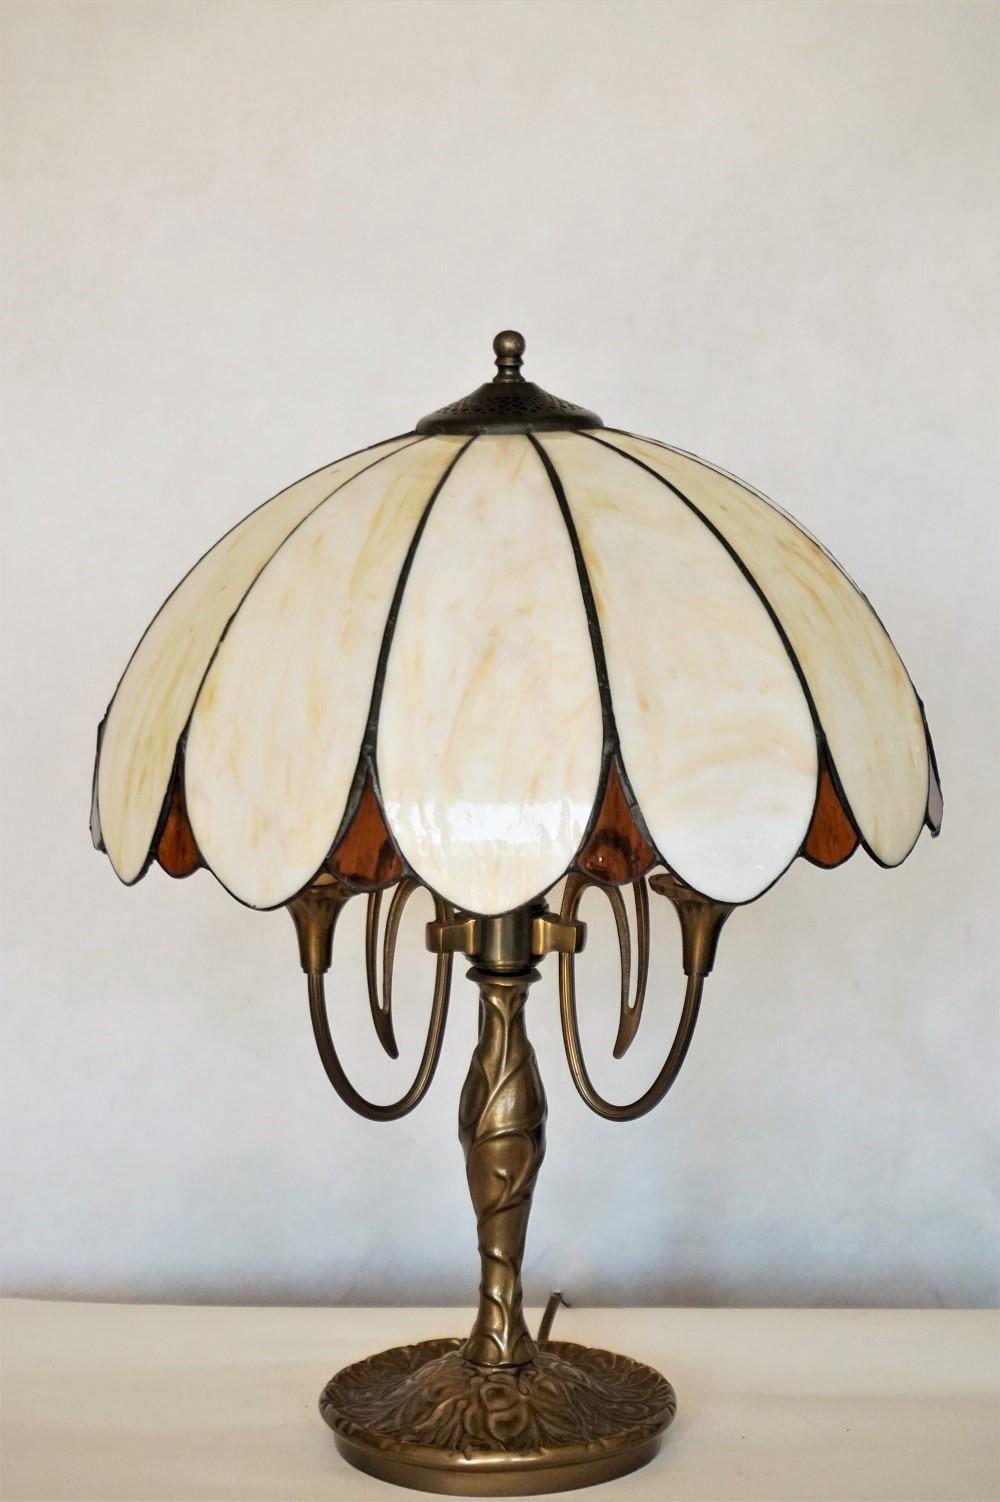 20th Century Art Deco Bronze Three-Light Table Lamp with Bent Slag Glass Shade, 1910-1920